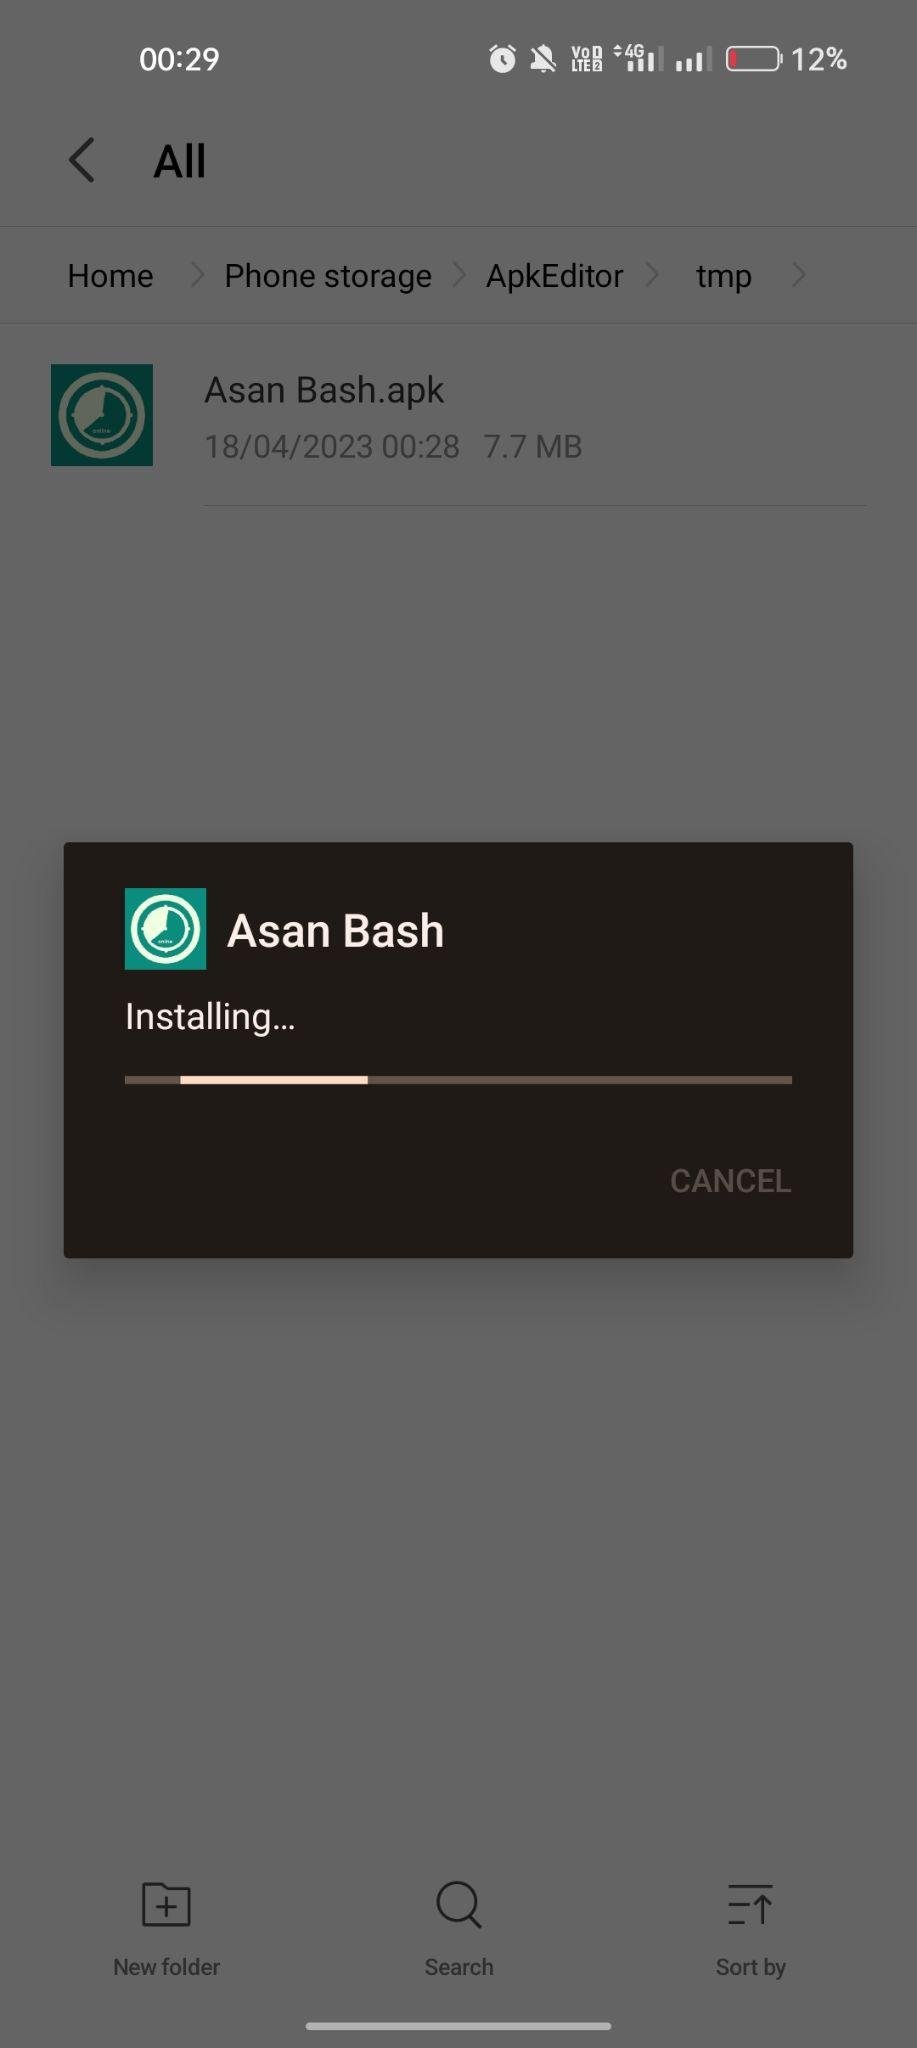 Asan Bash apk installing